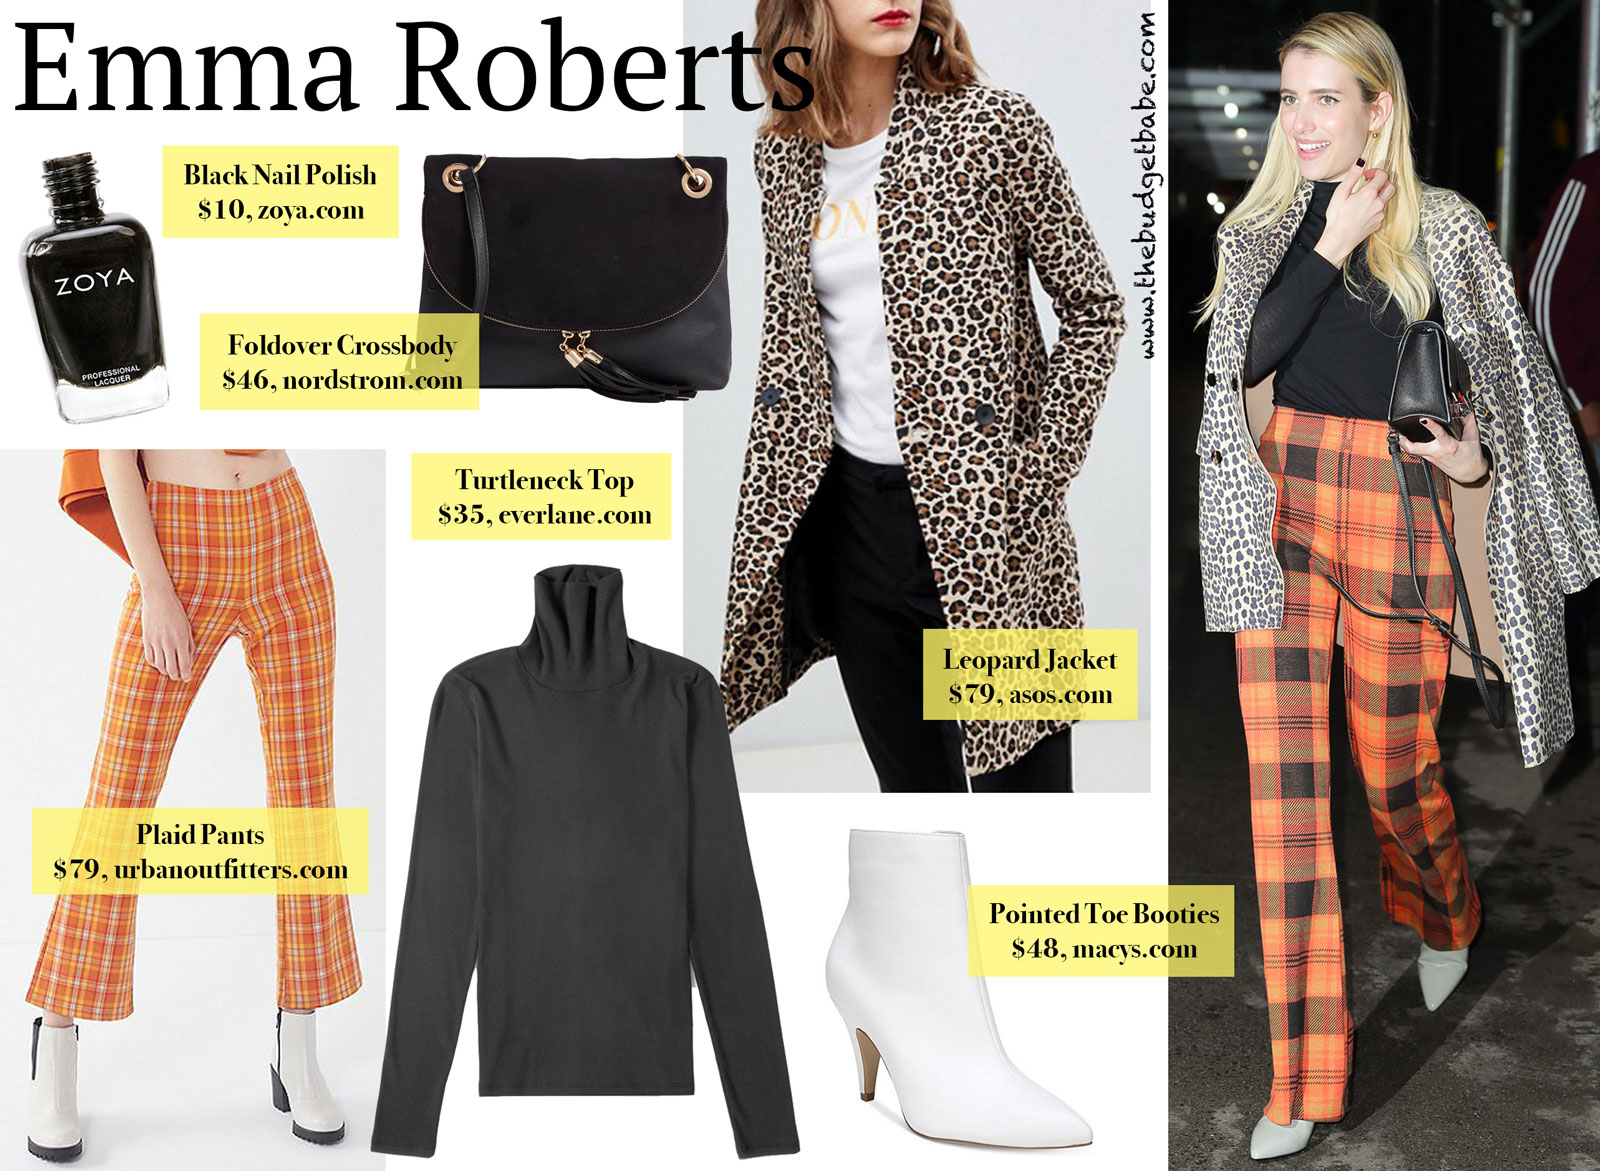 Emma Roberts Orange Plaid Pants Look for Less